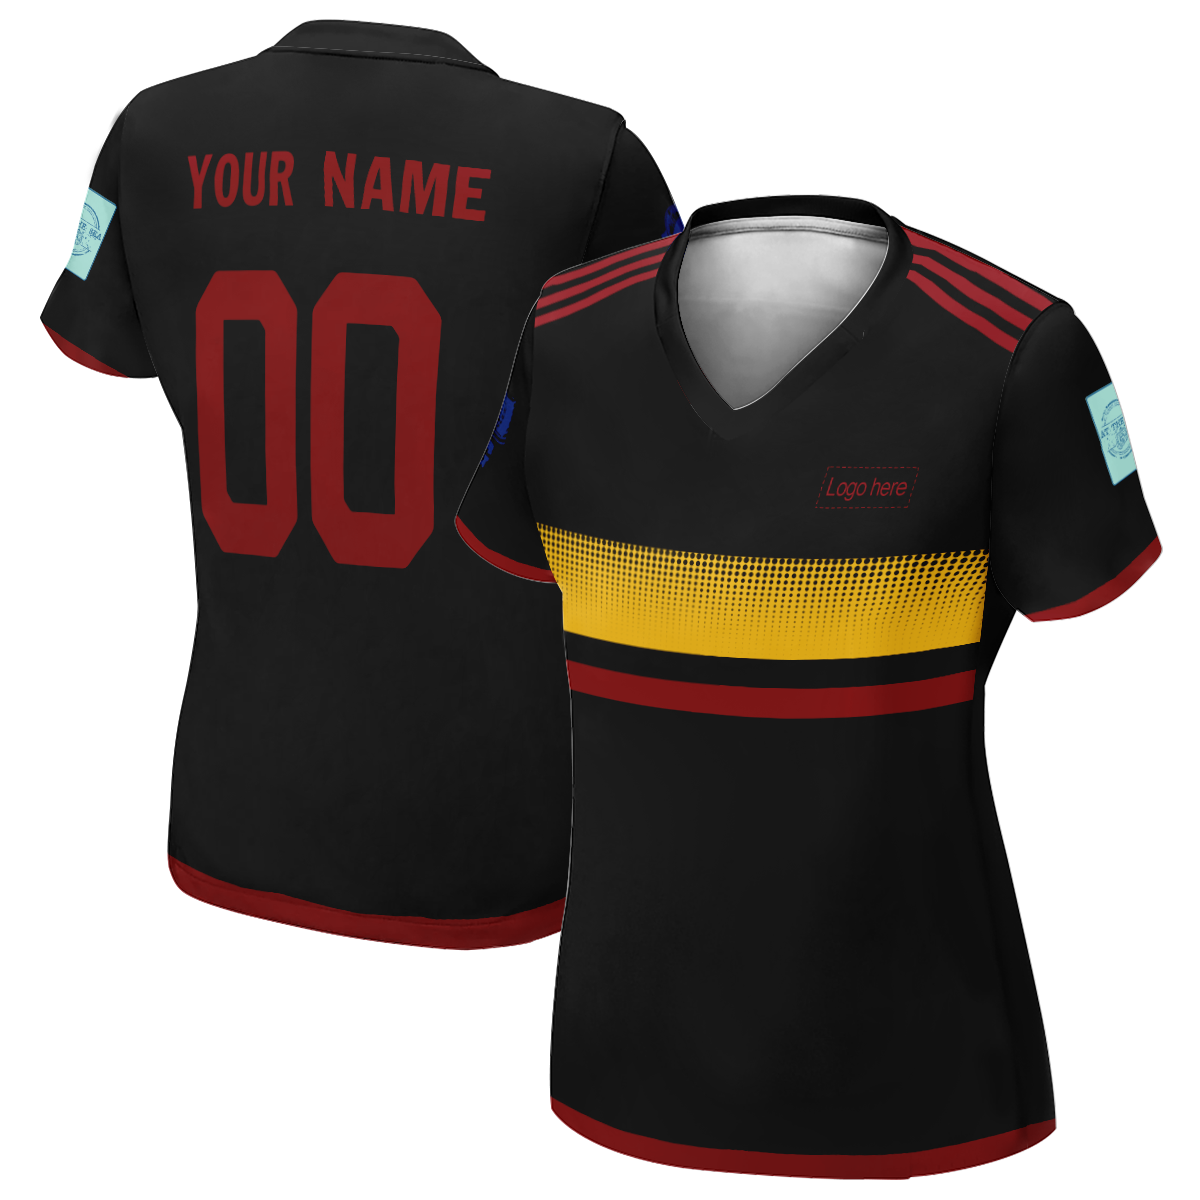 Camisa de futebol feminina autêntica da Copa do Mundo da Colômbia personalizada com logotipo